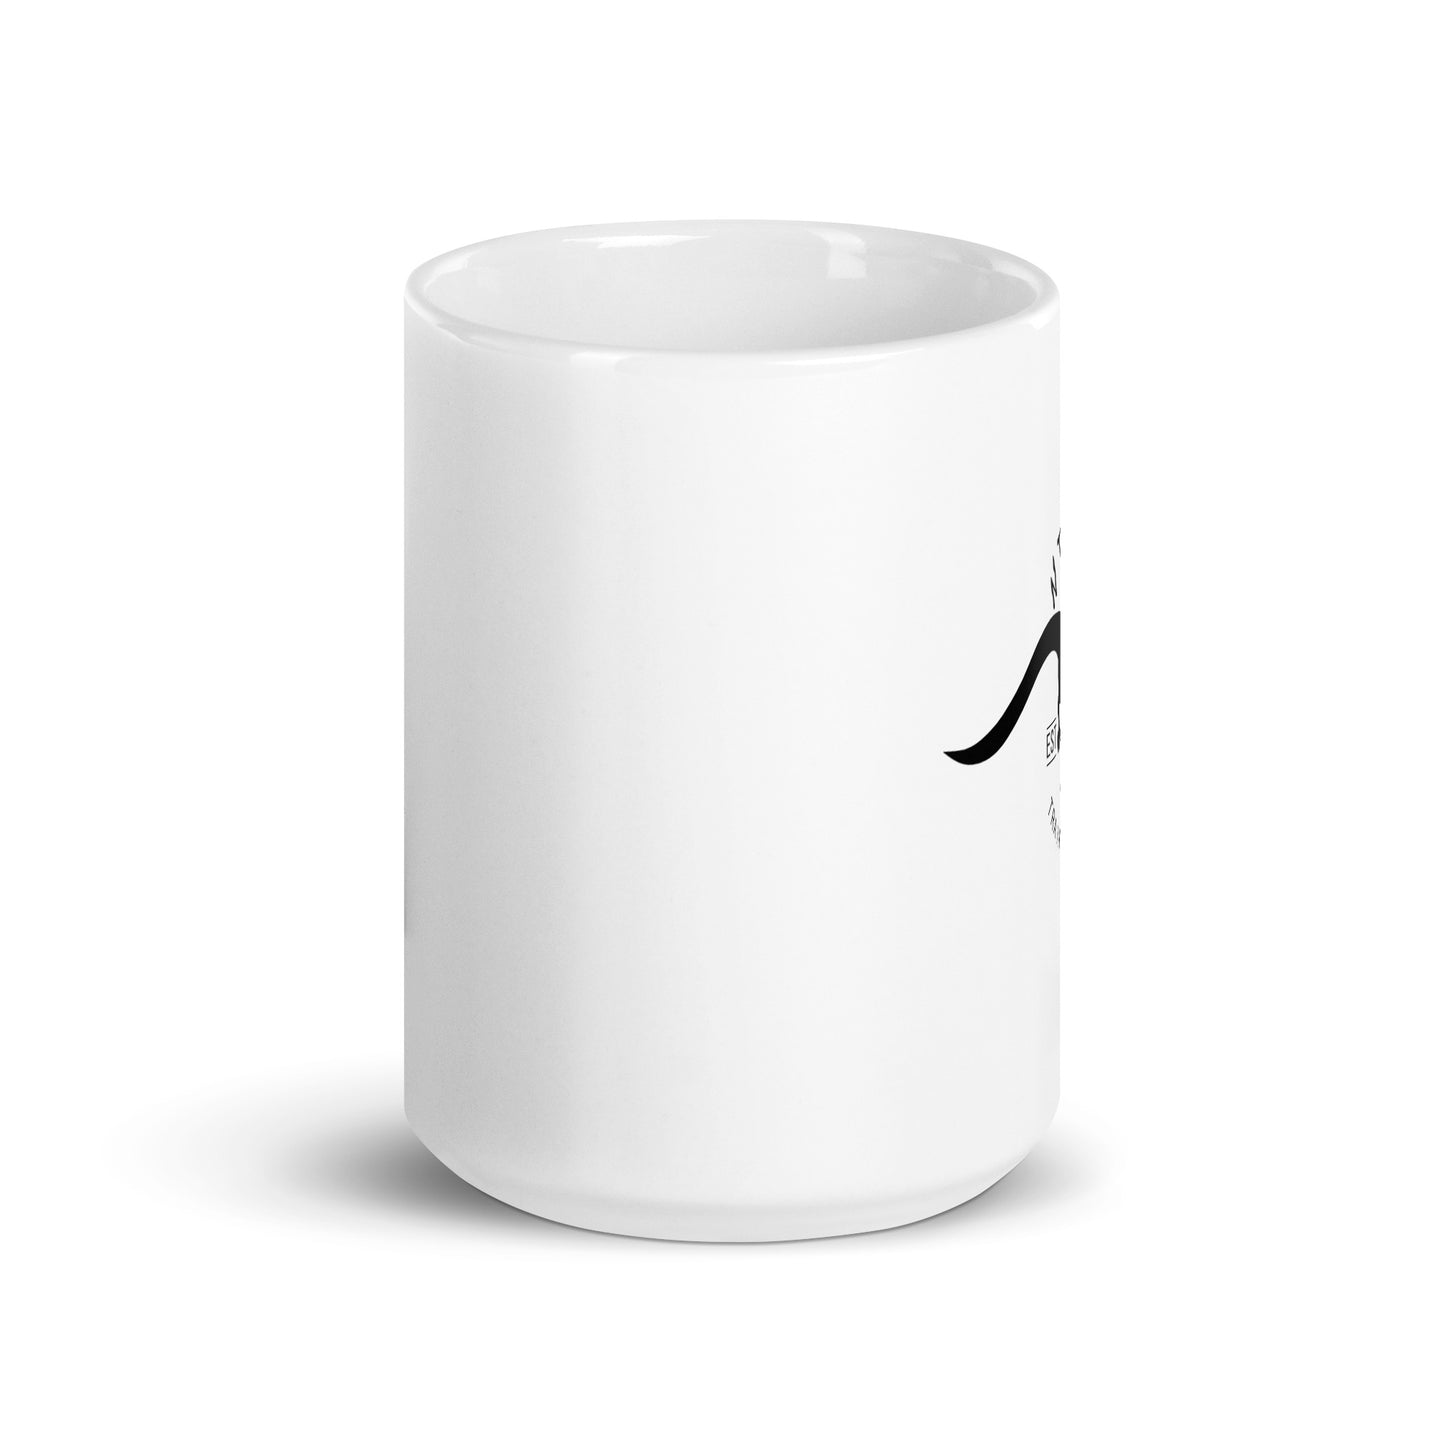 "NTBFW" White Glossy Mug